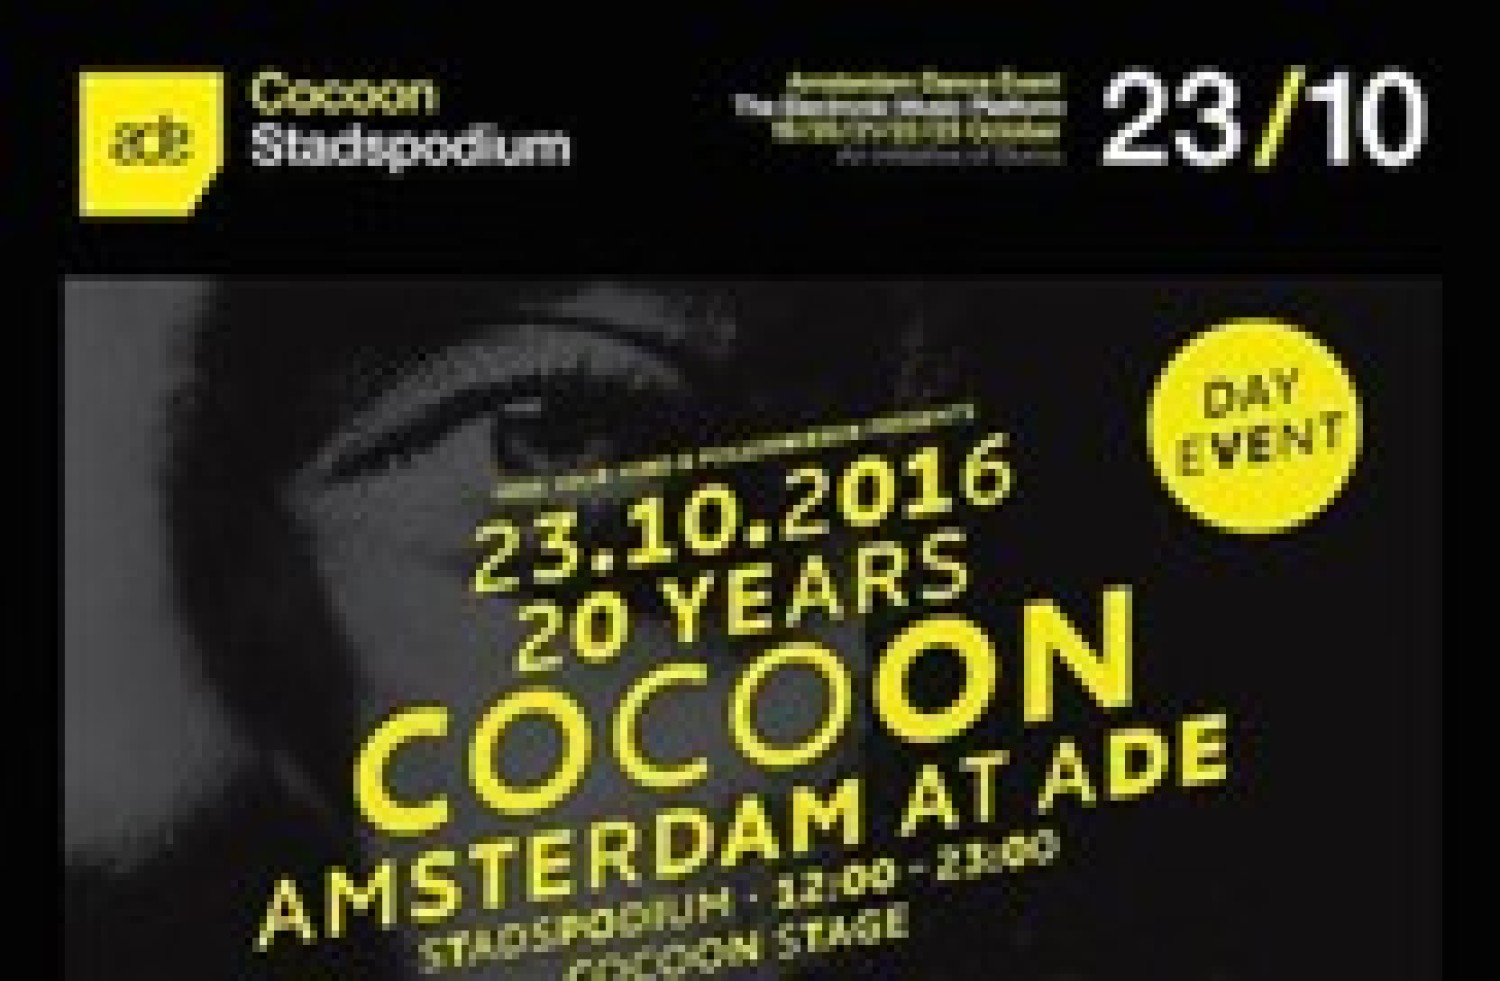 Party nieuws: Cocoon celebrates 20th anniversary at Stadspodium